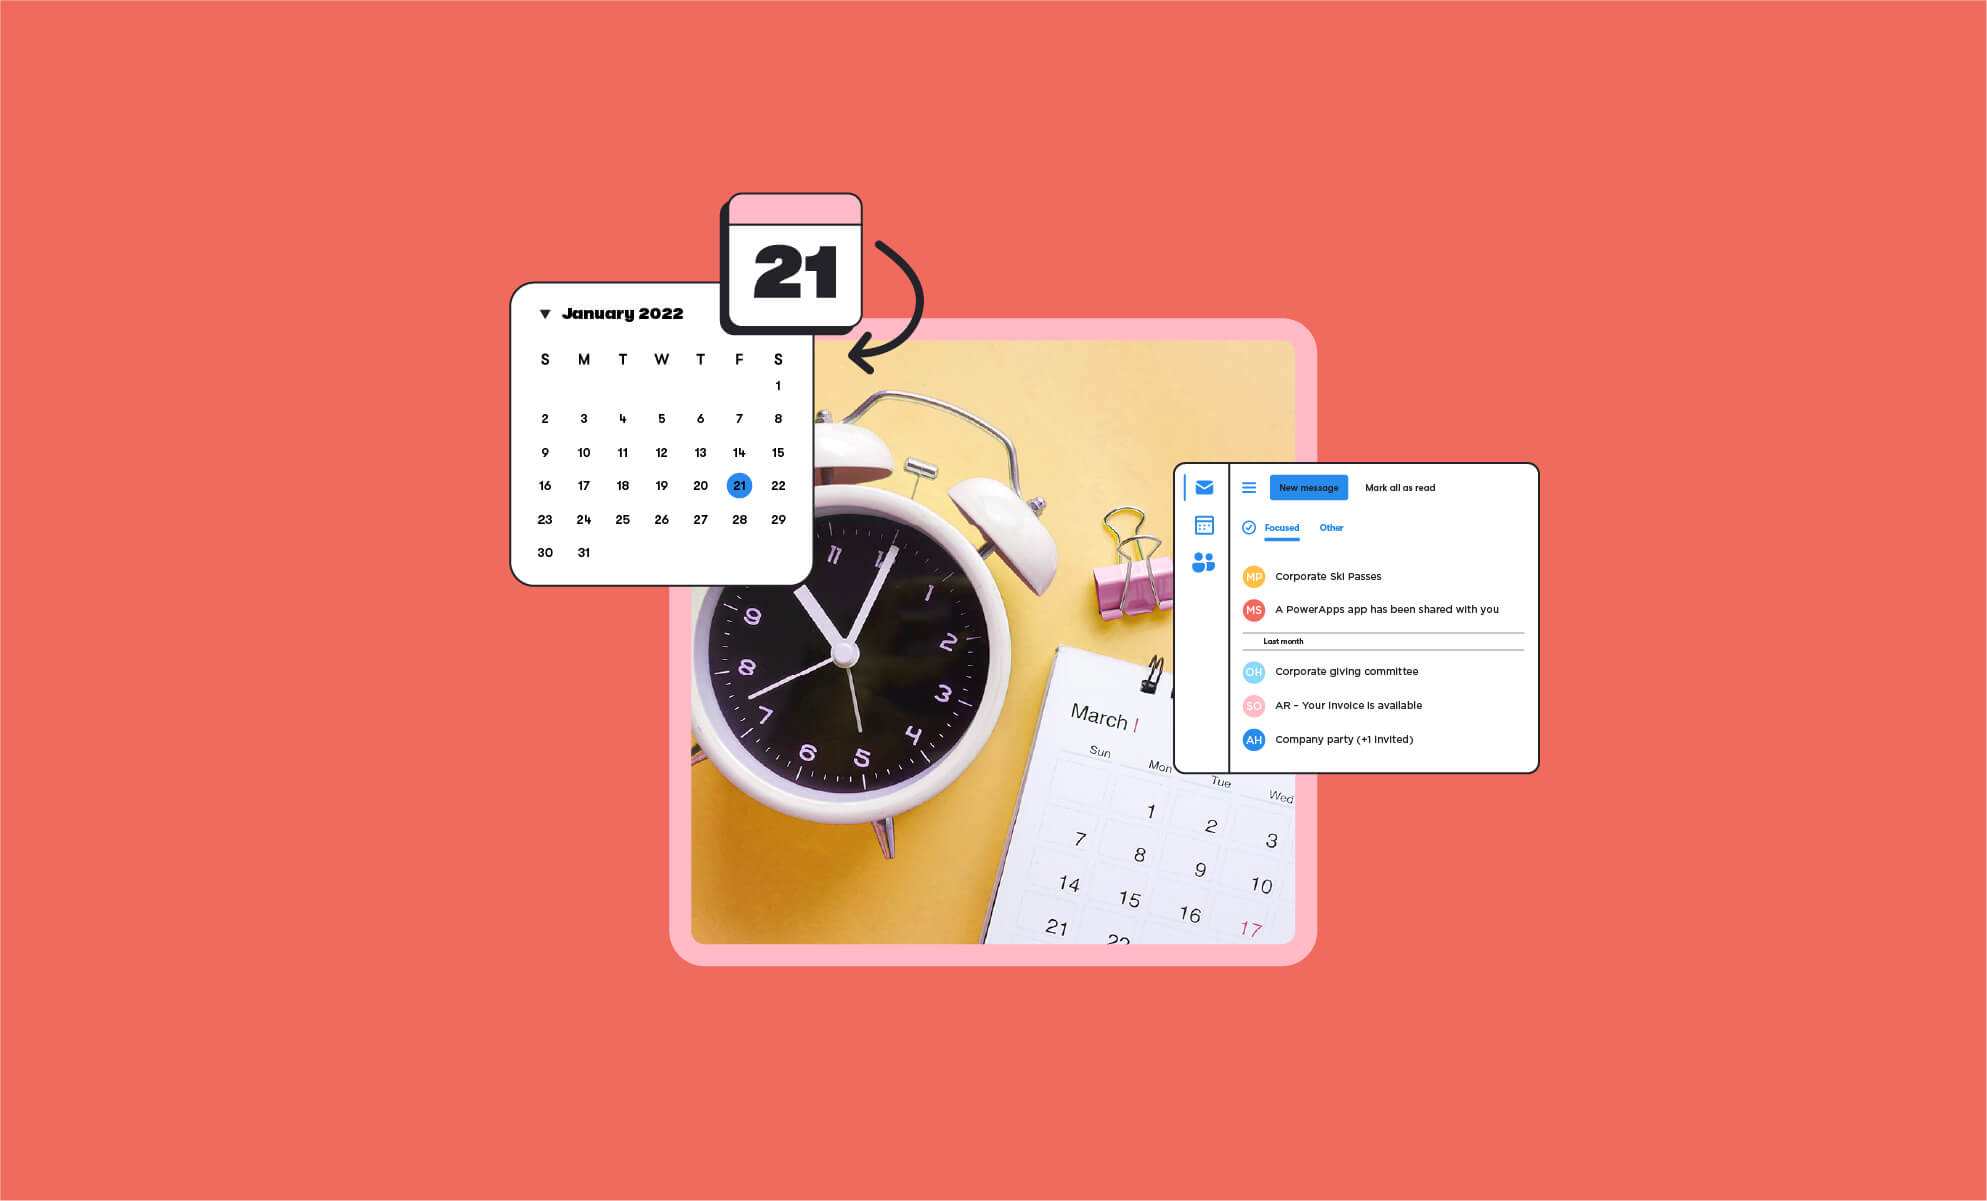 A Calendar and a clock